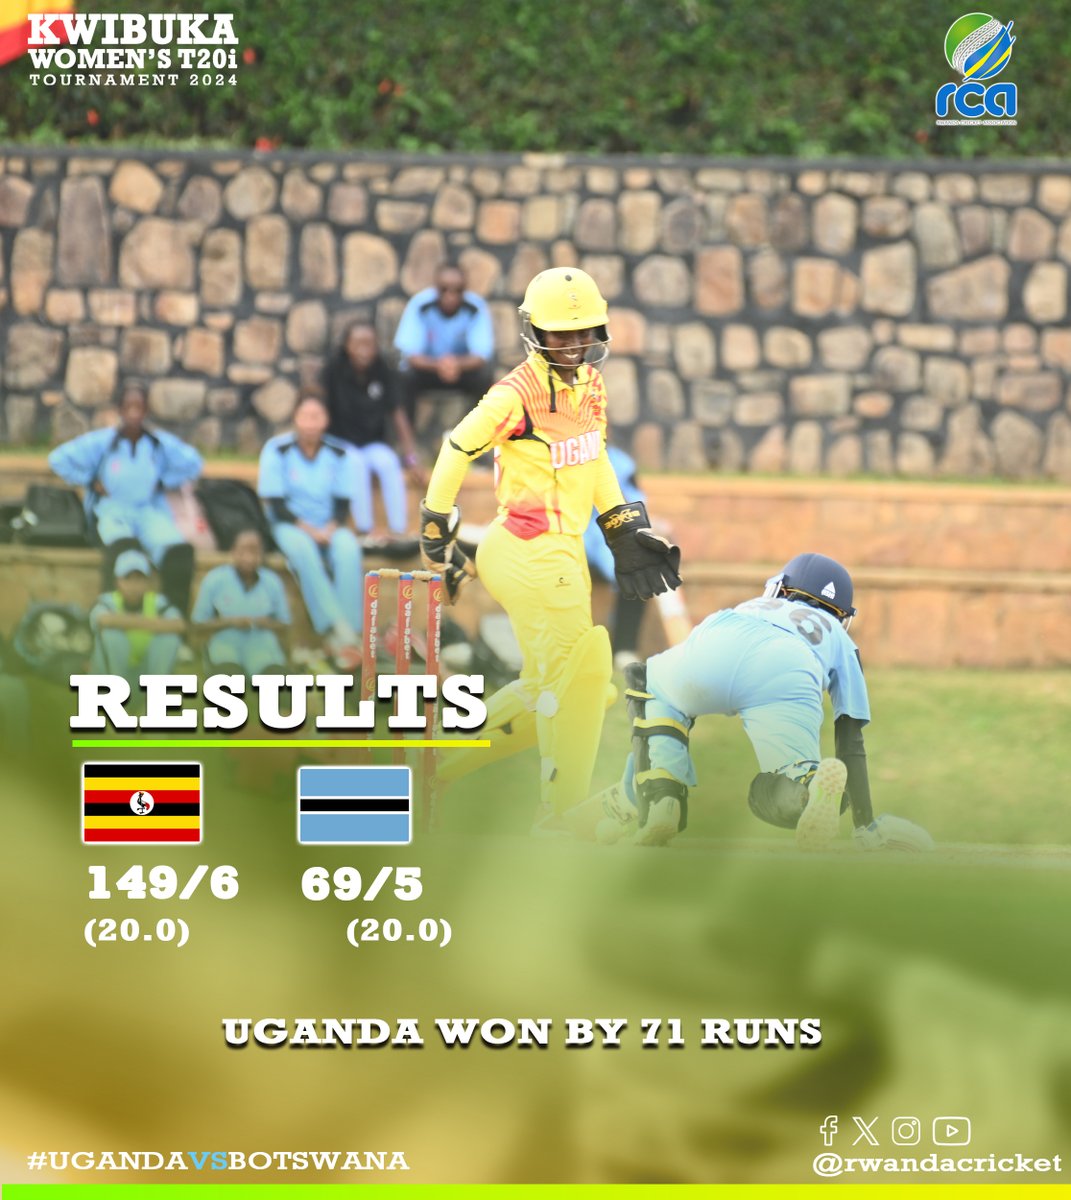 🏏  🇺🇬 Uganda Women vs. 🇧🇼 Botswana Women🏏
Uganda Women won by 71 runs! 🎉
Stephanie: Scored 43 runs off 34 balls
Janet: Scored 20 runs off 27 balls and bowled 2 overs with 1 maiden and 1 wicket
#KwibukaCricket2024 #UgandaVsBotswana #CricketForAll #LiveCricket #Victory